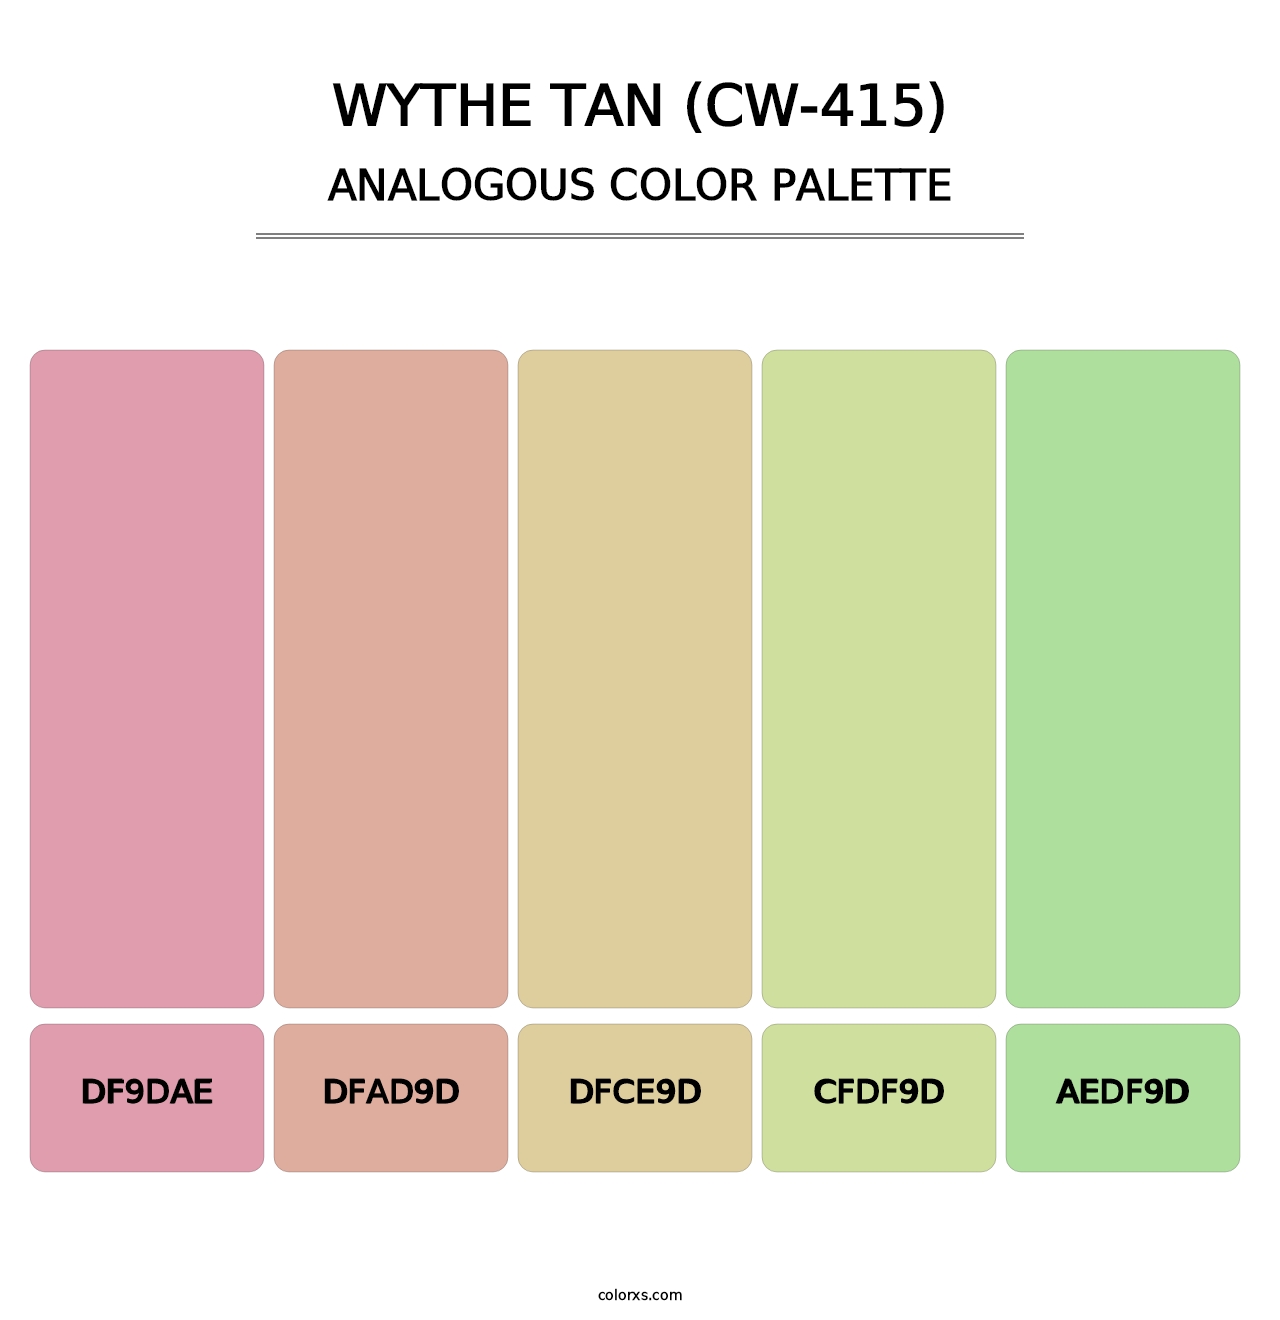 Wythe Tan (CW-415) - Analogous Color Palette